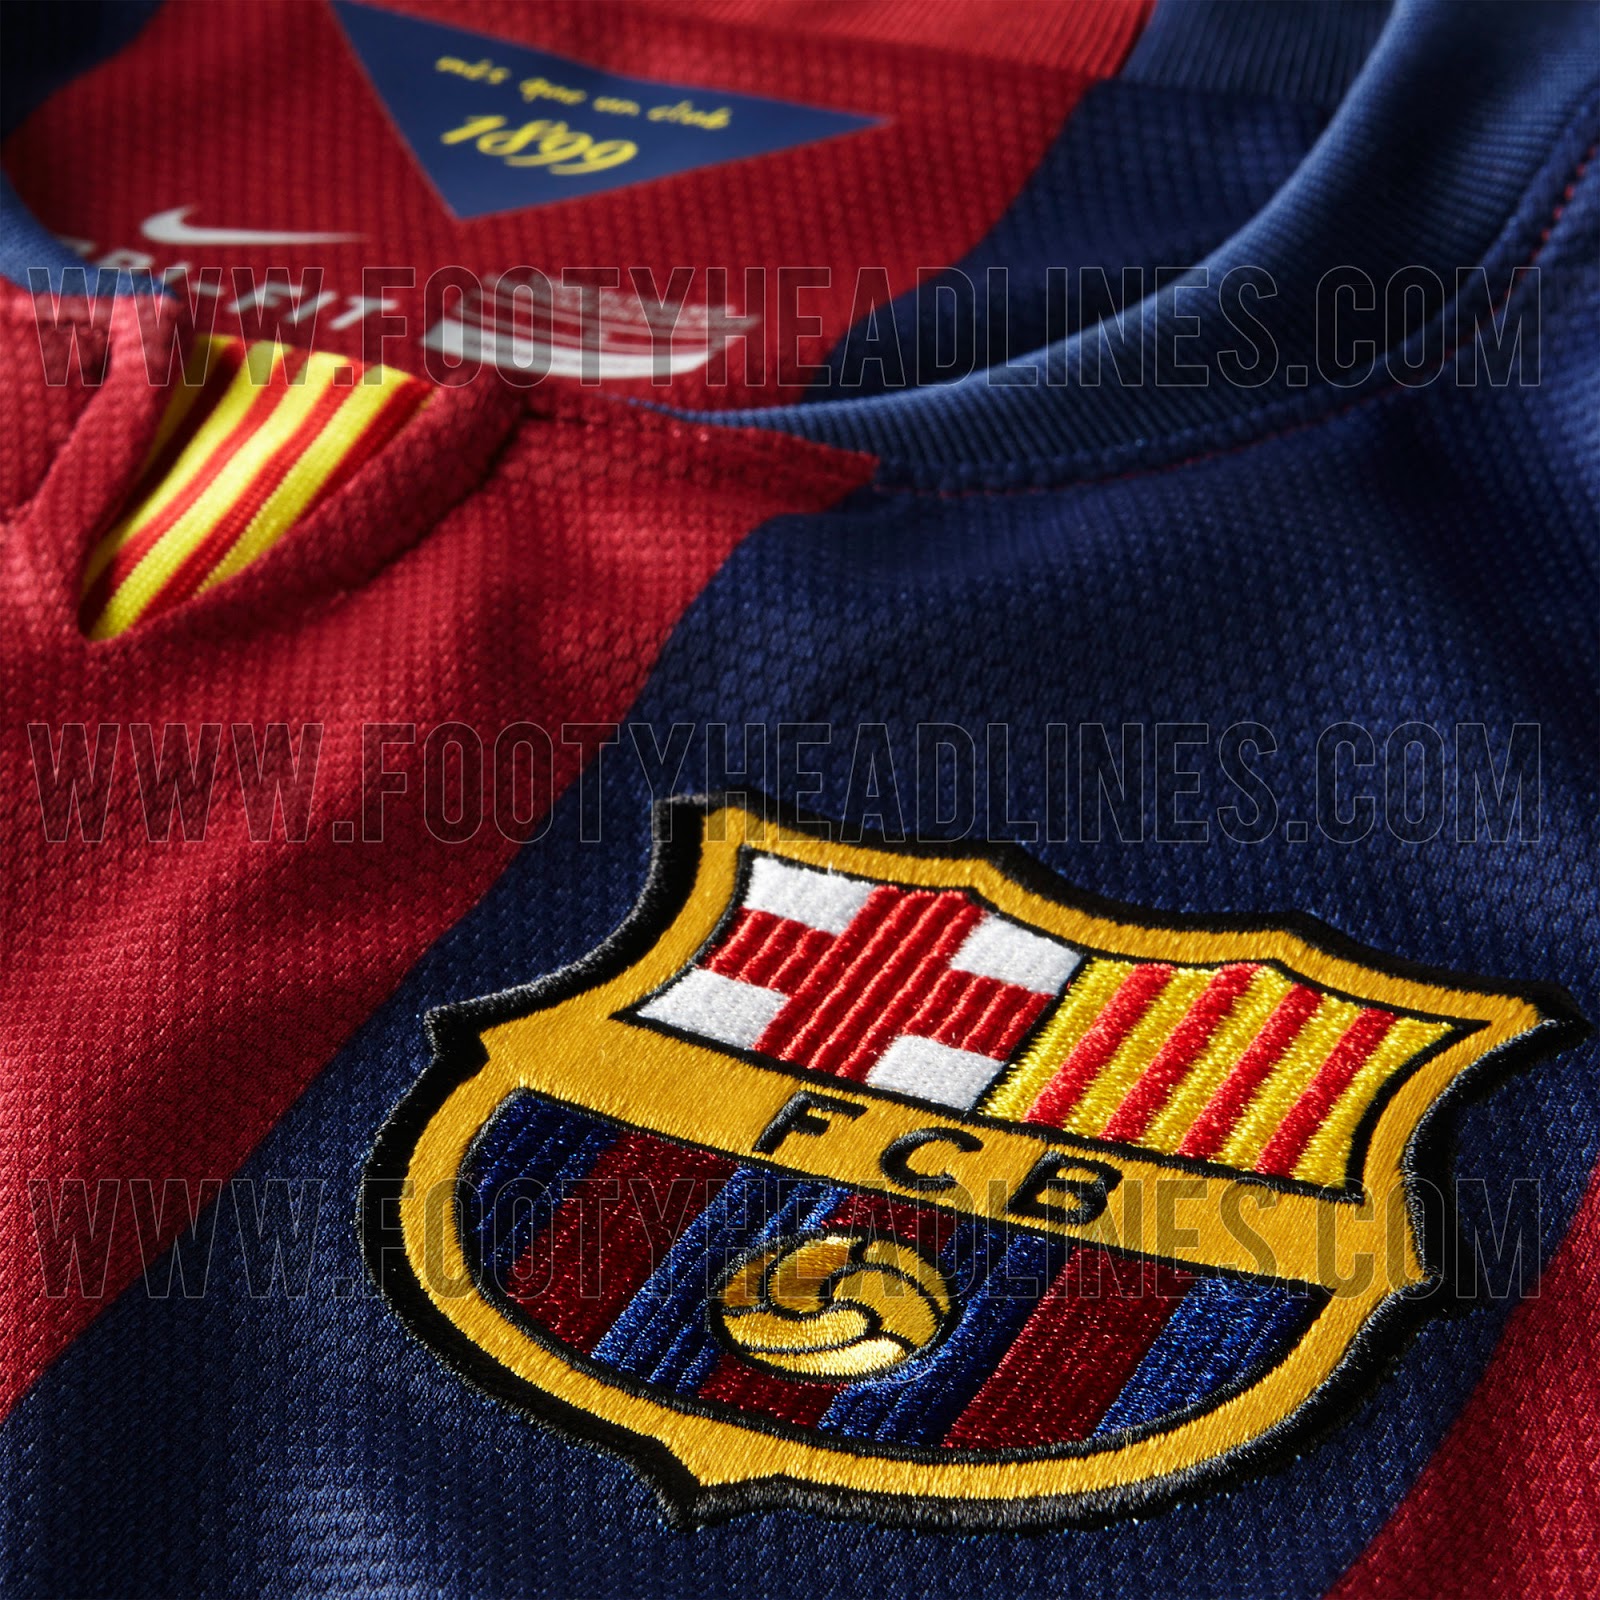 FC Barcelona 14-15 (2014-15) Home, Away and Third Kits - Footy Headlines